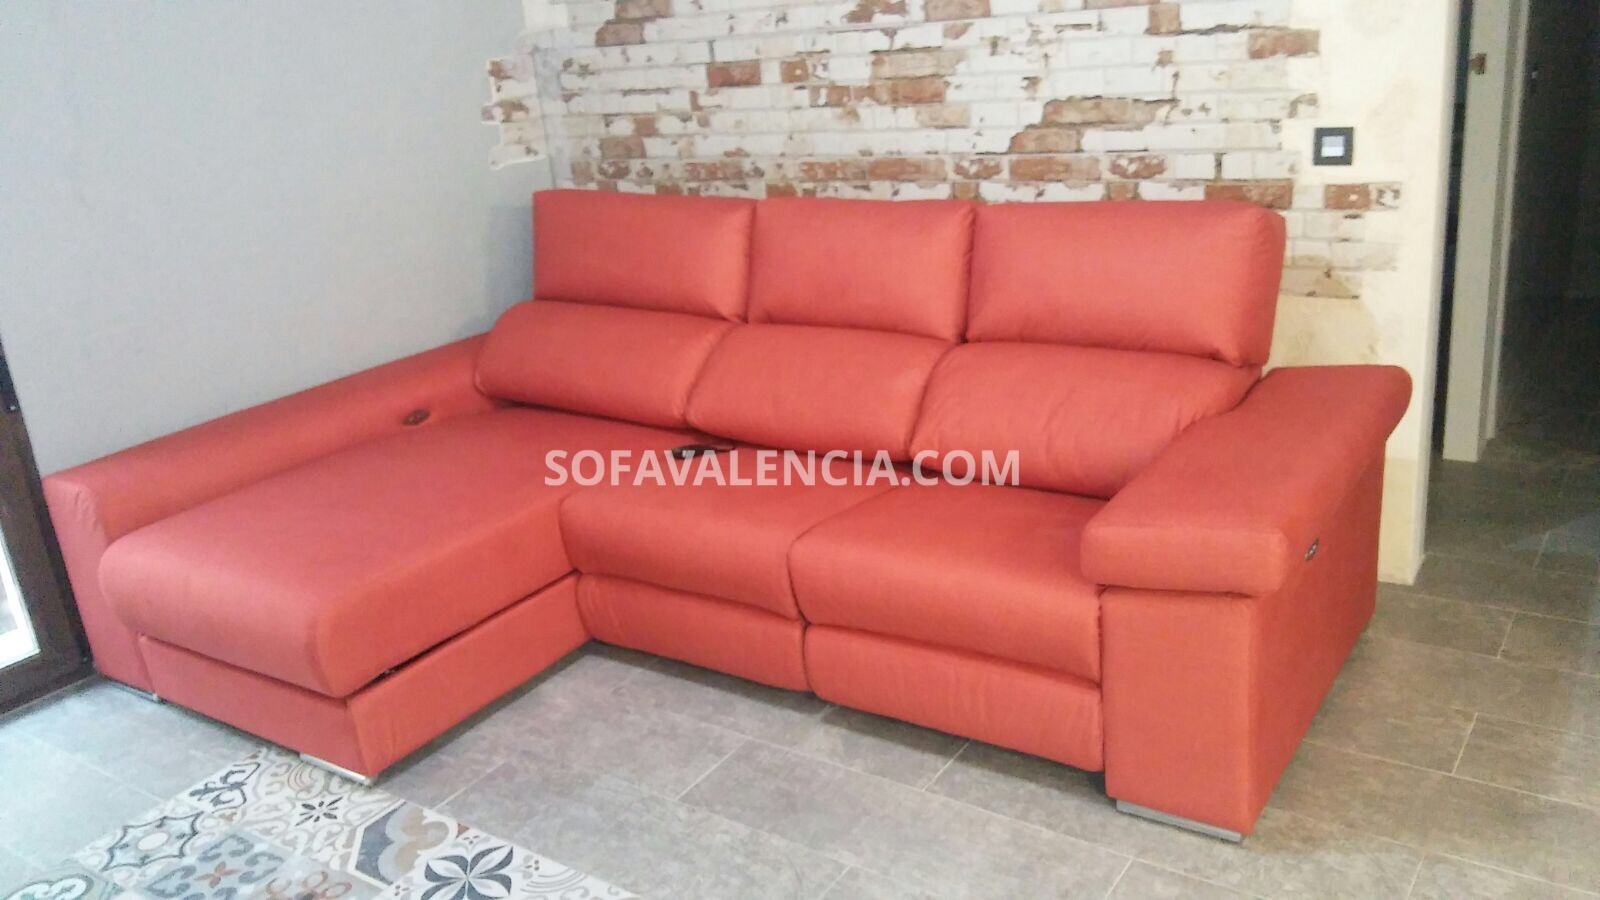 sofa-valencia-fotos-clientes-1